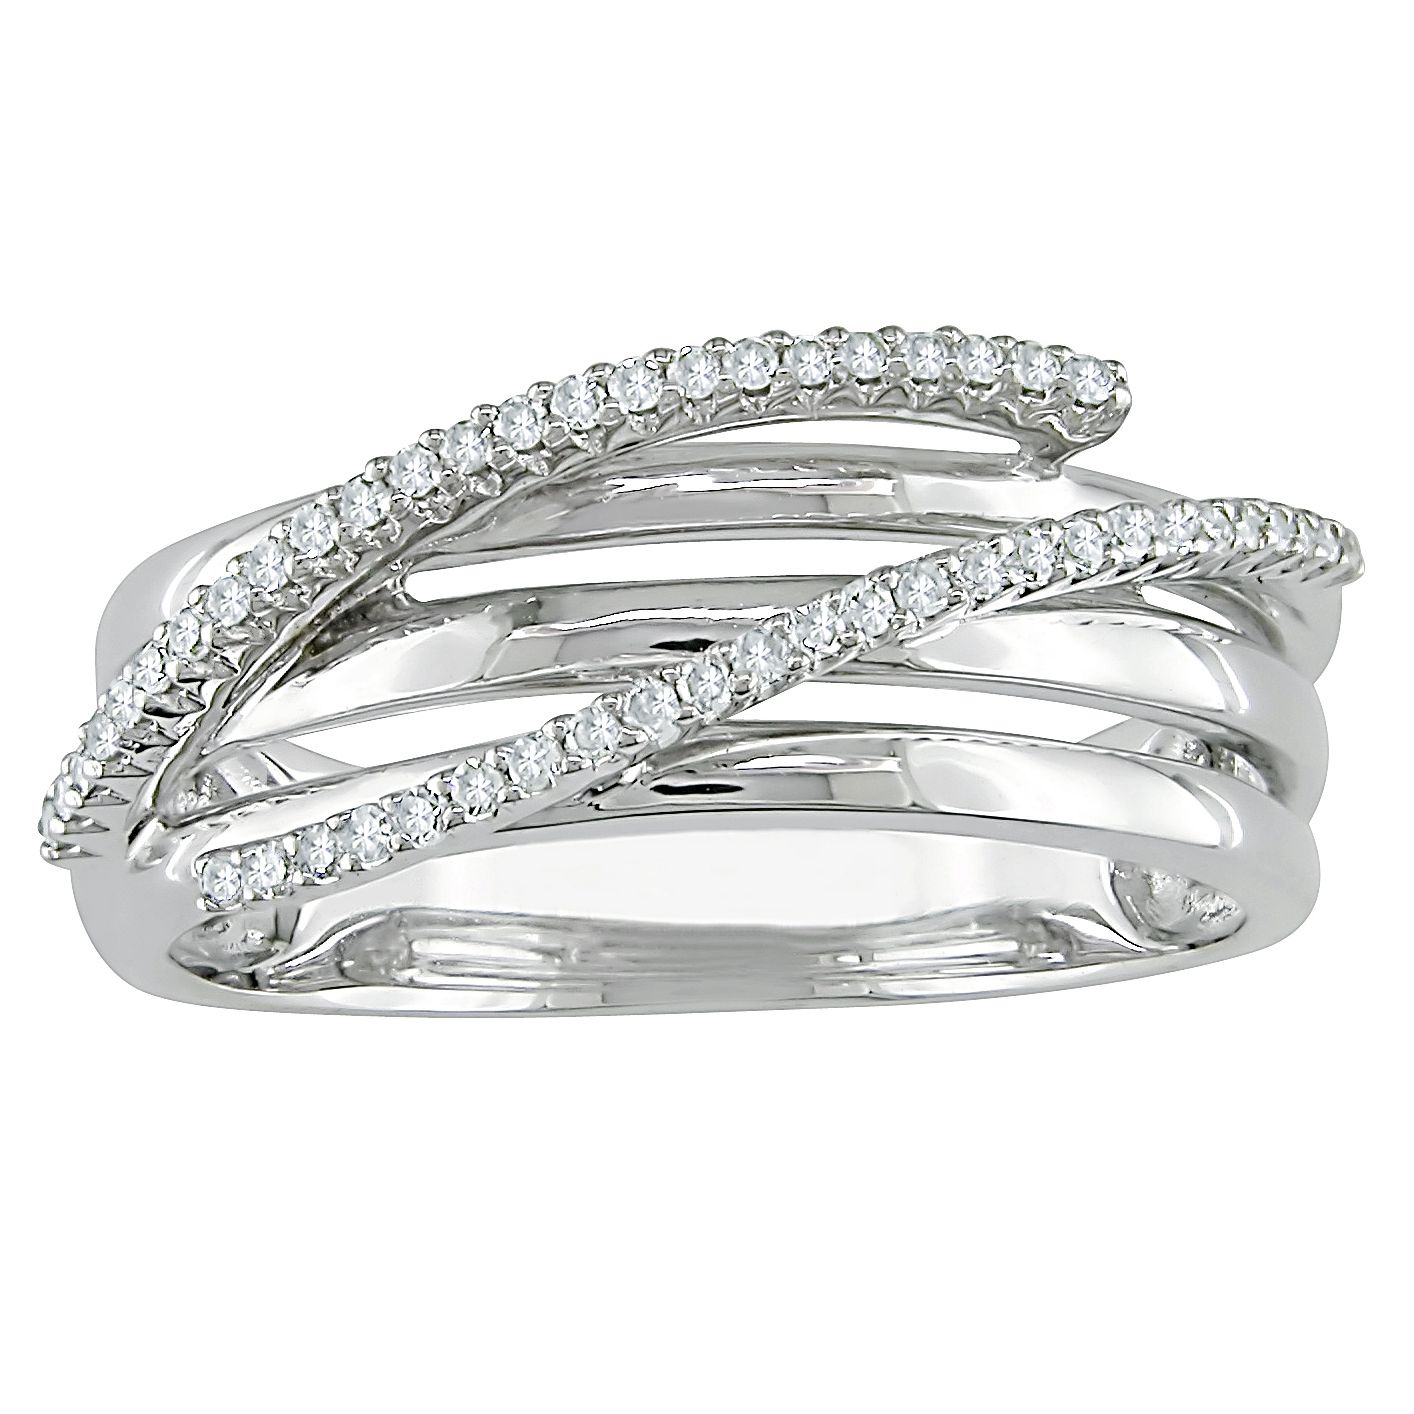 1/7 CTTW Diamond Fashion Ring Set in 10K White Gold (GH I2;I3)